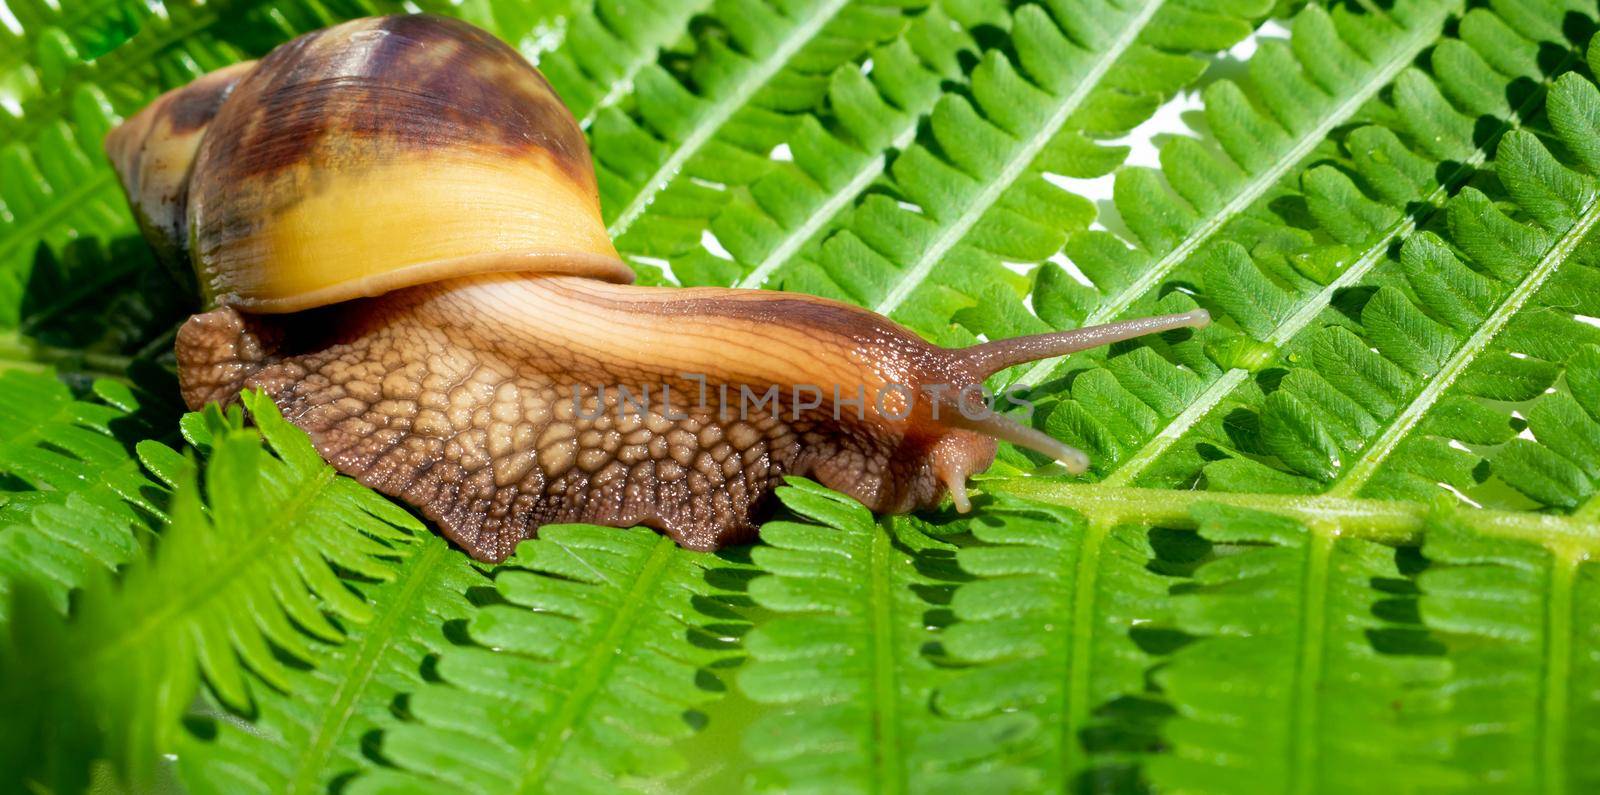 Achatina fulica, a giant snail crawling on a green fern leaf by lapushka62